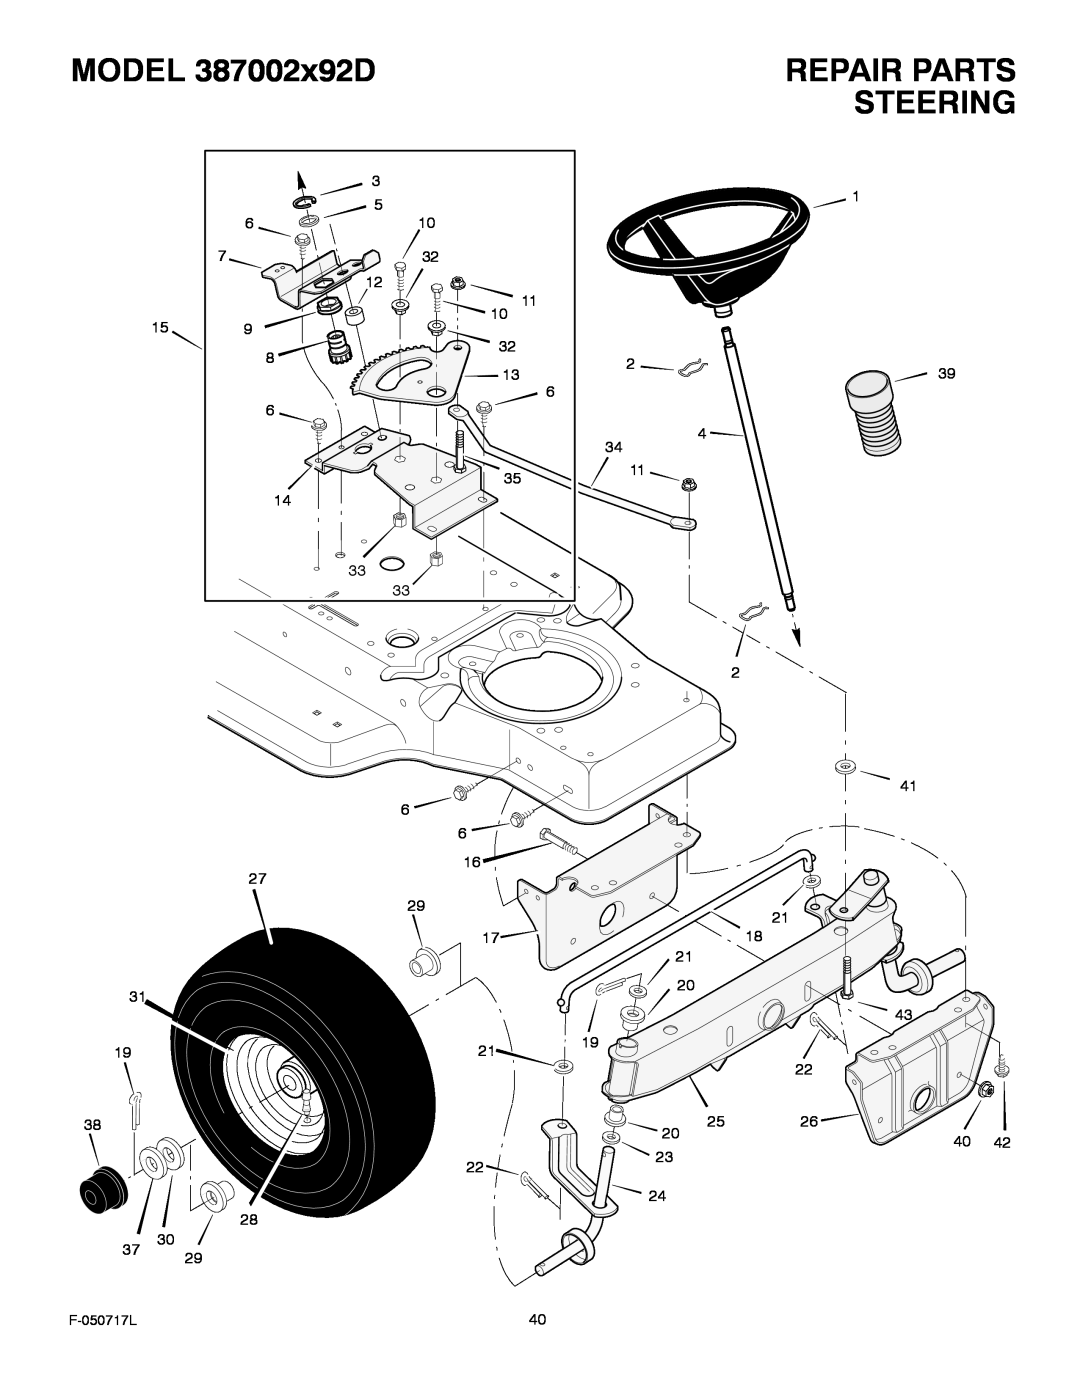 Murray manual Steering, MODEL 387002x92D, Repair Parts, F-050717L 